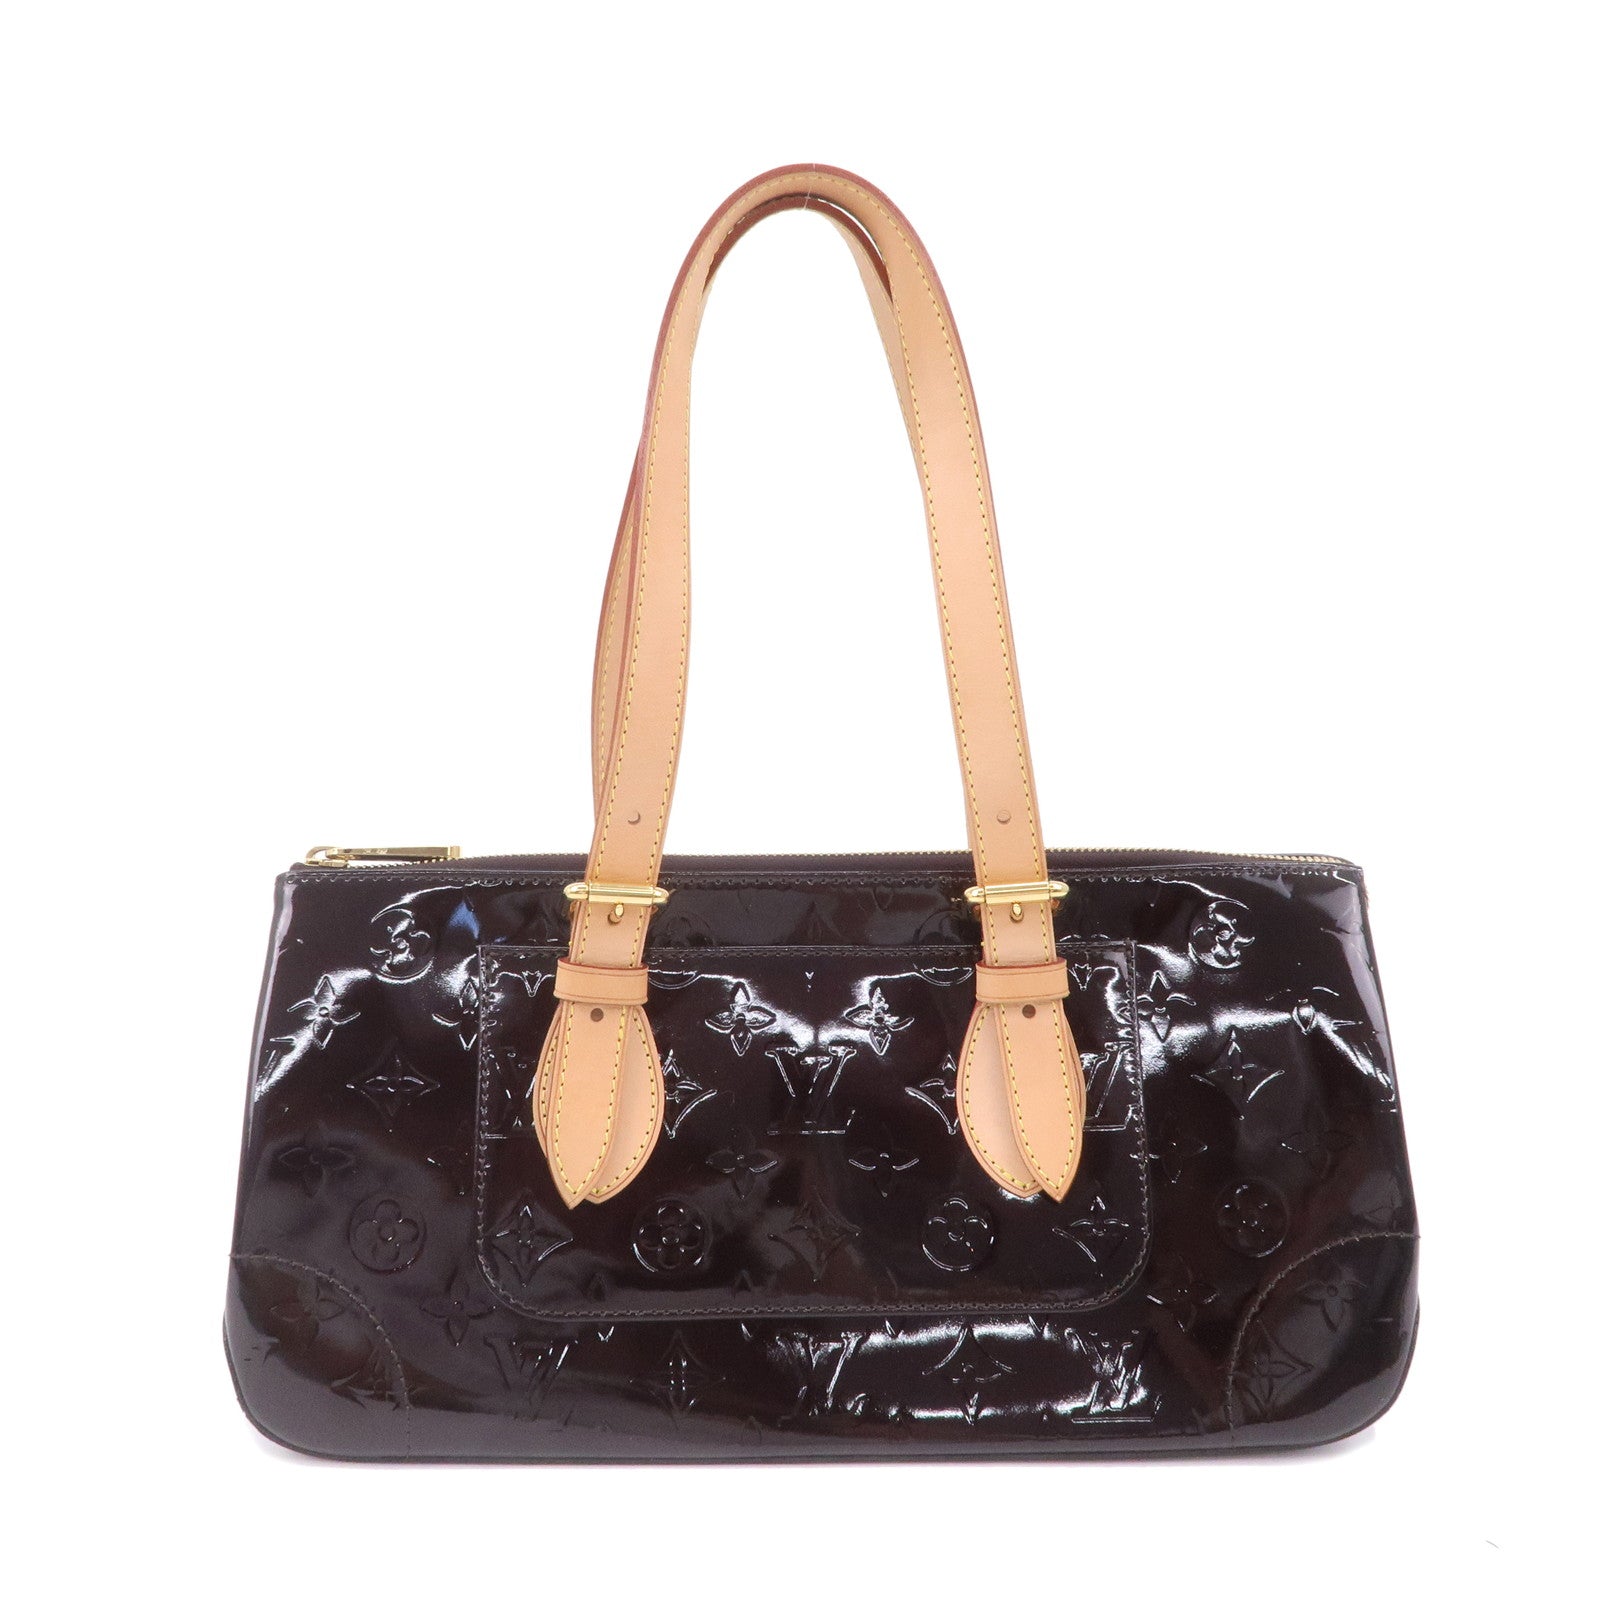 Shop Louis Vuitton MONOGRAM VERNIS Women's Handbags